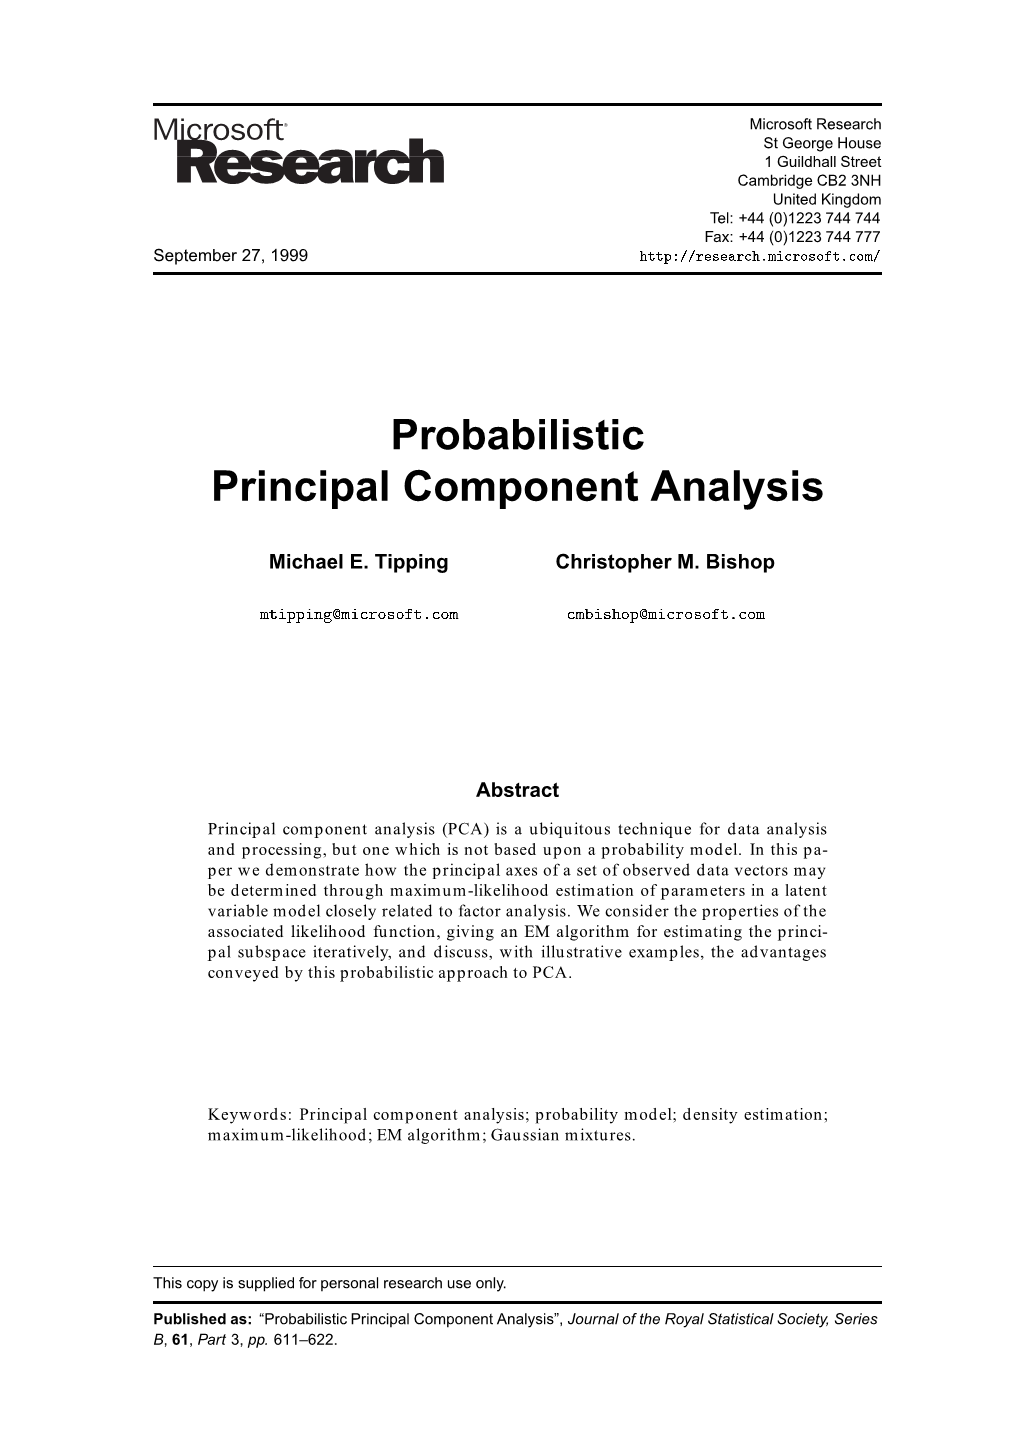 Probabilistic Principal Component Analysis